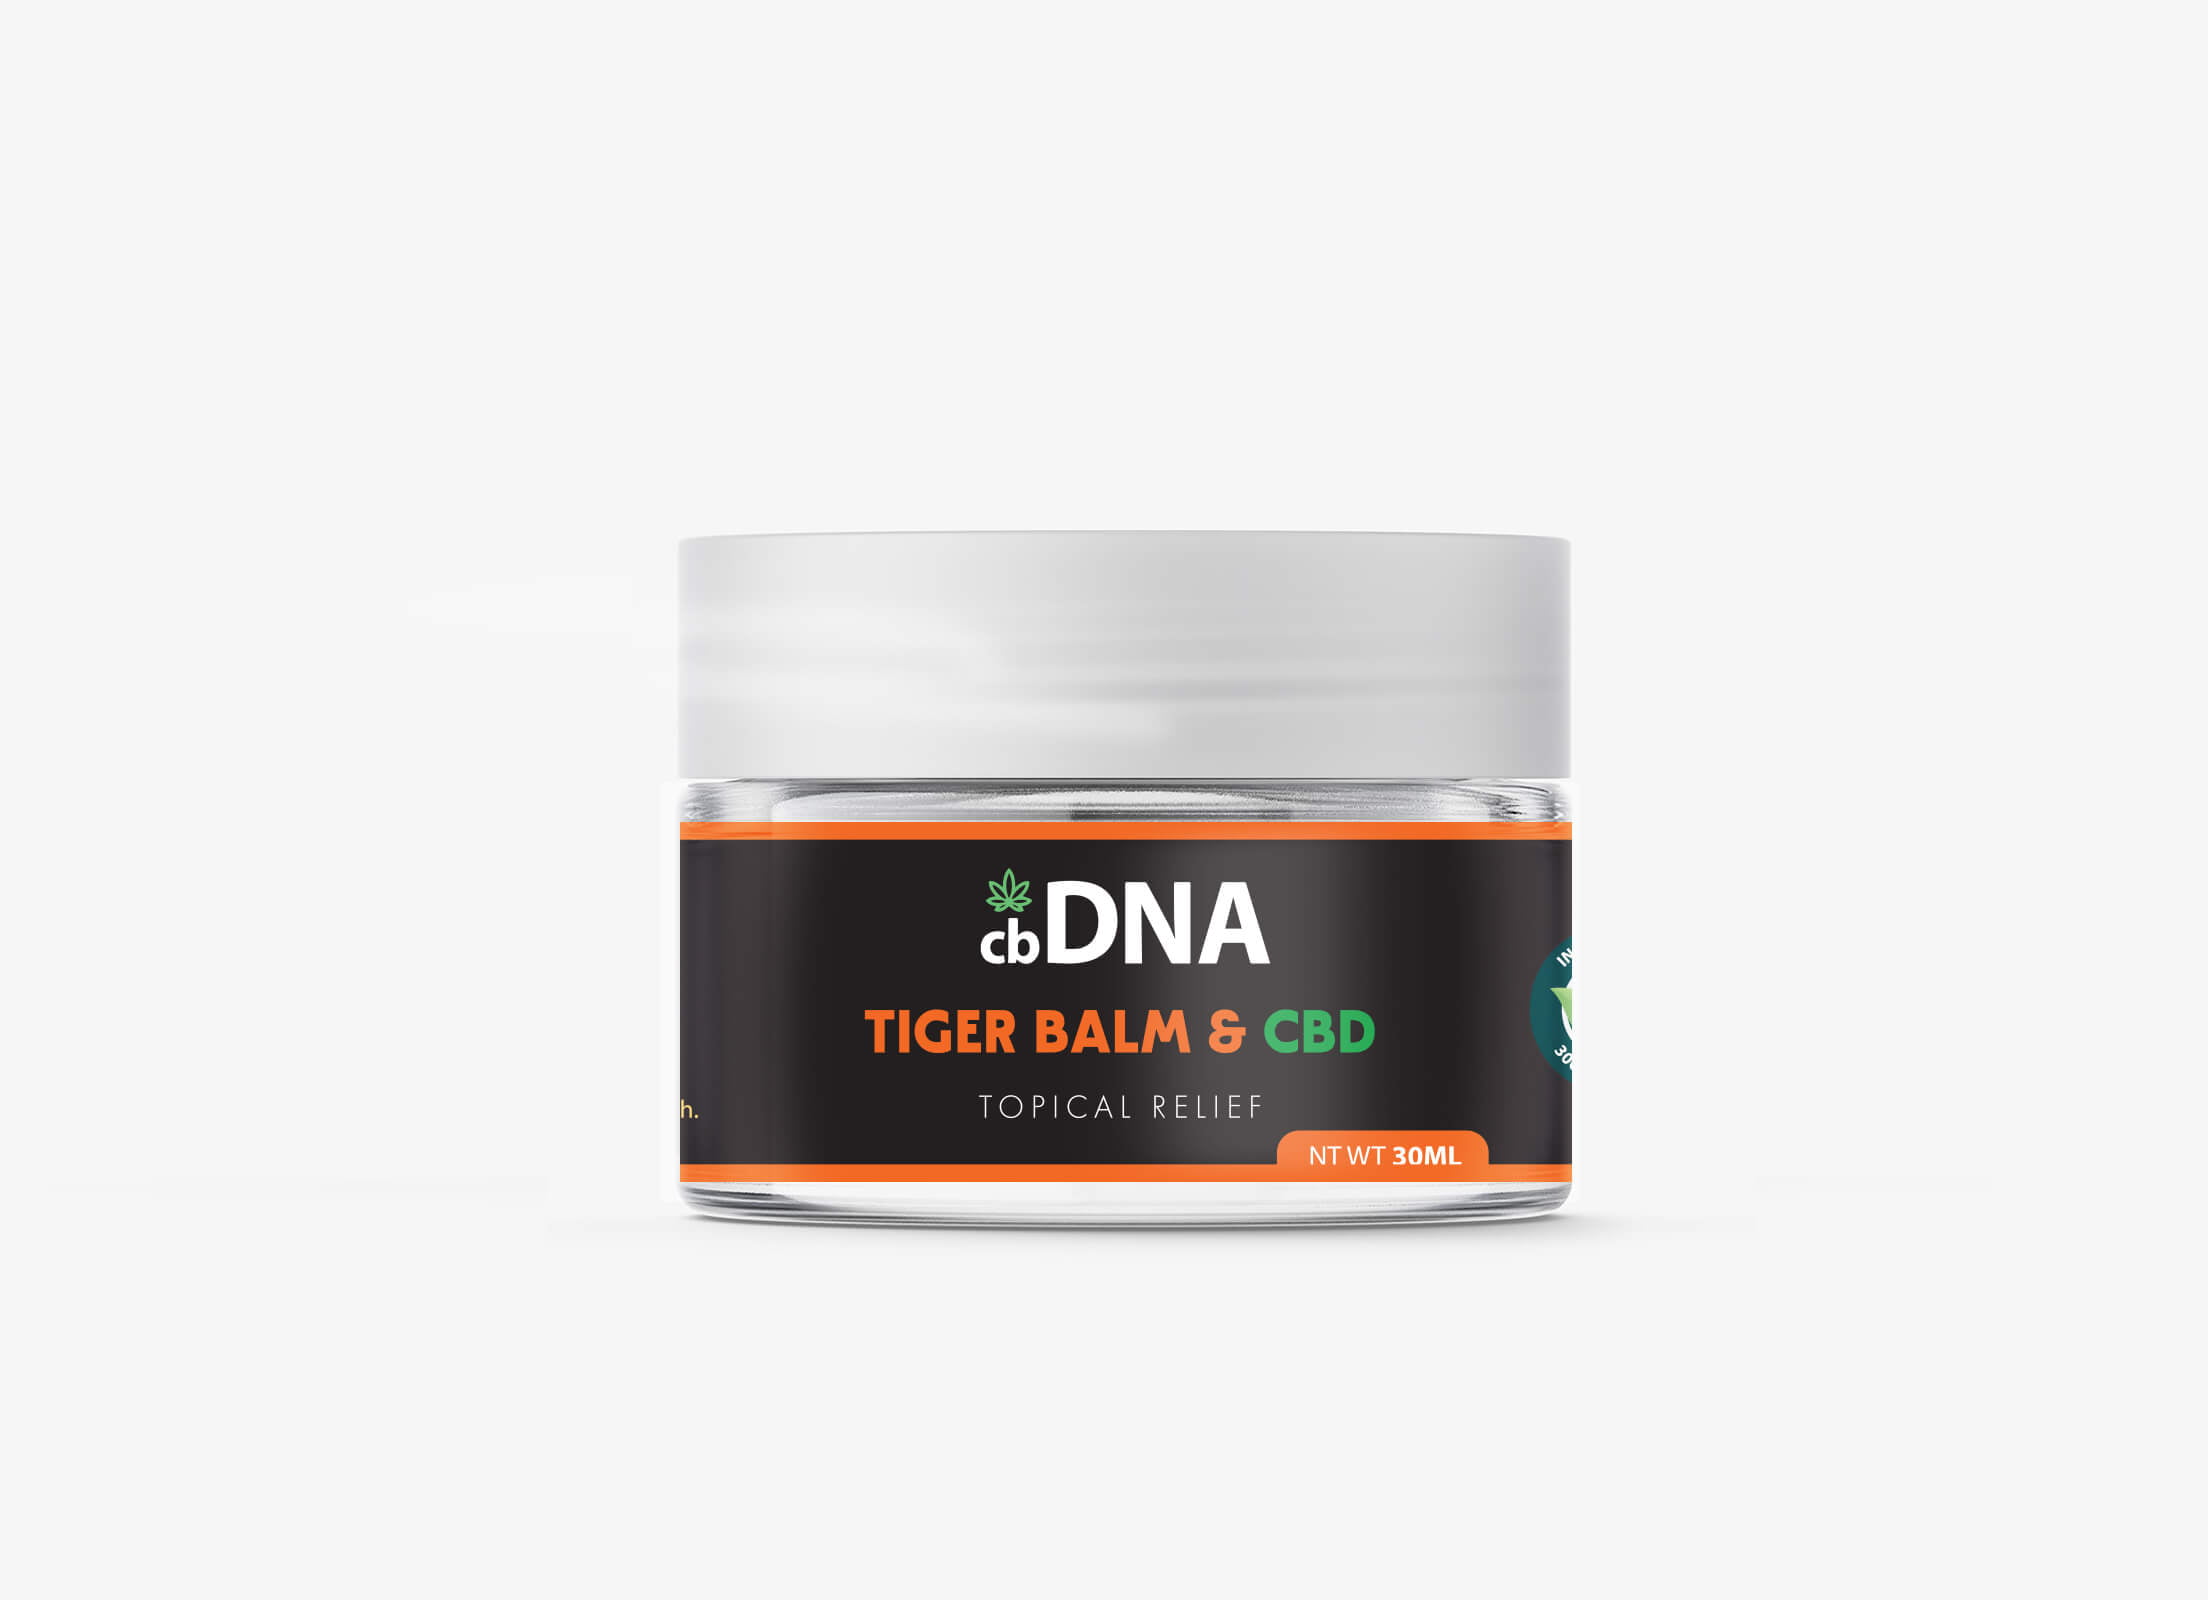 cbDNA - Tiger Balm